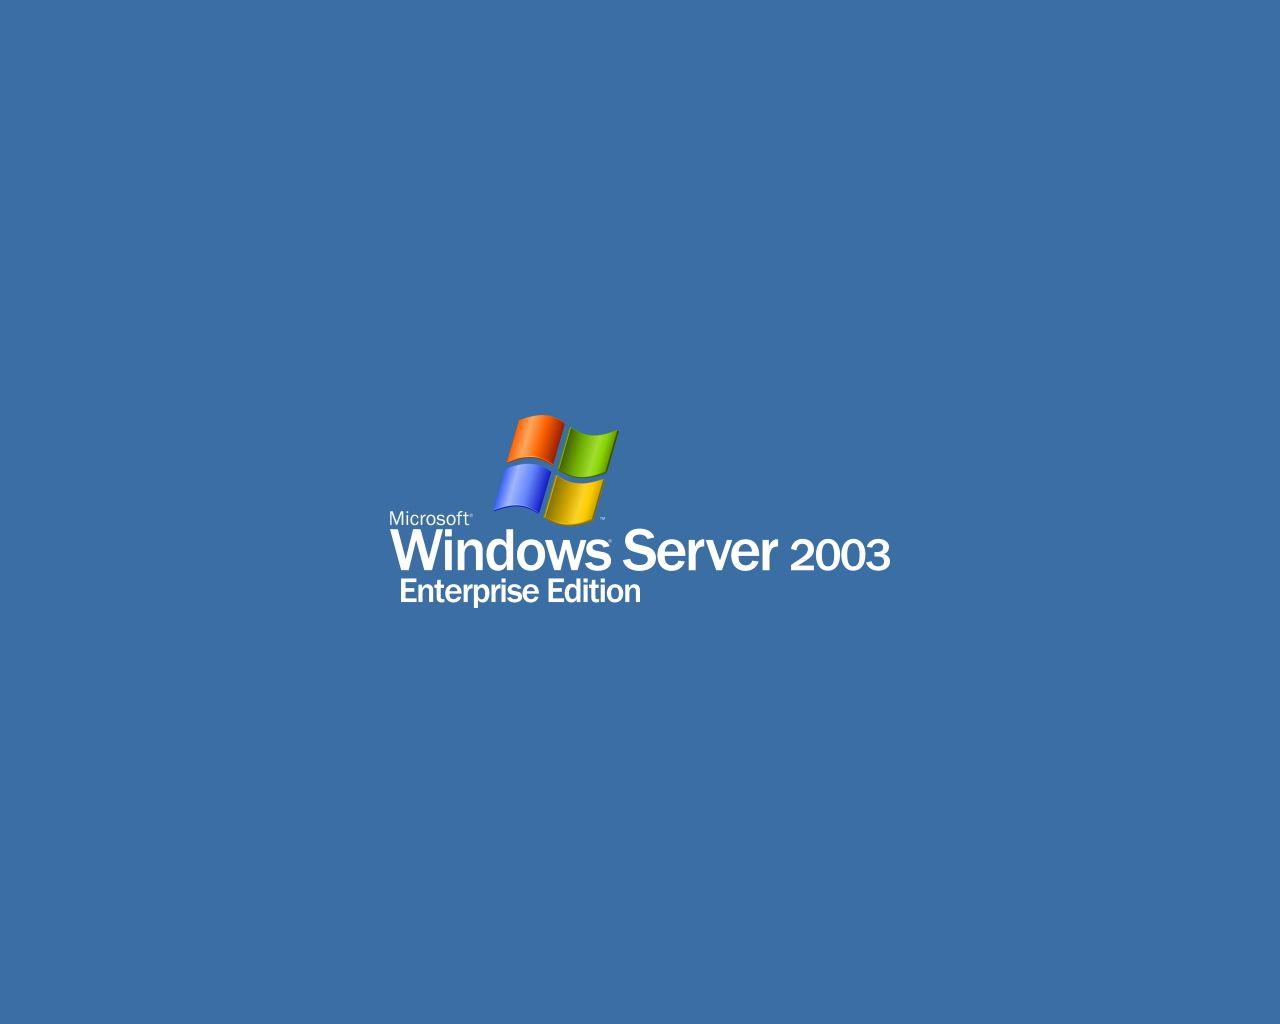 Windows Server 2003 Wallpaper- #images